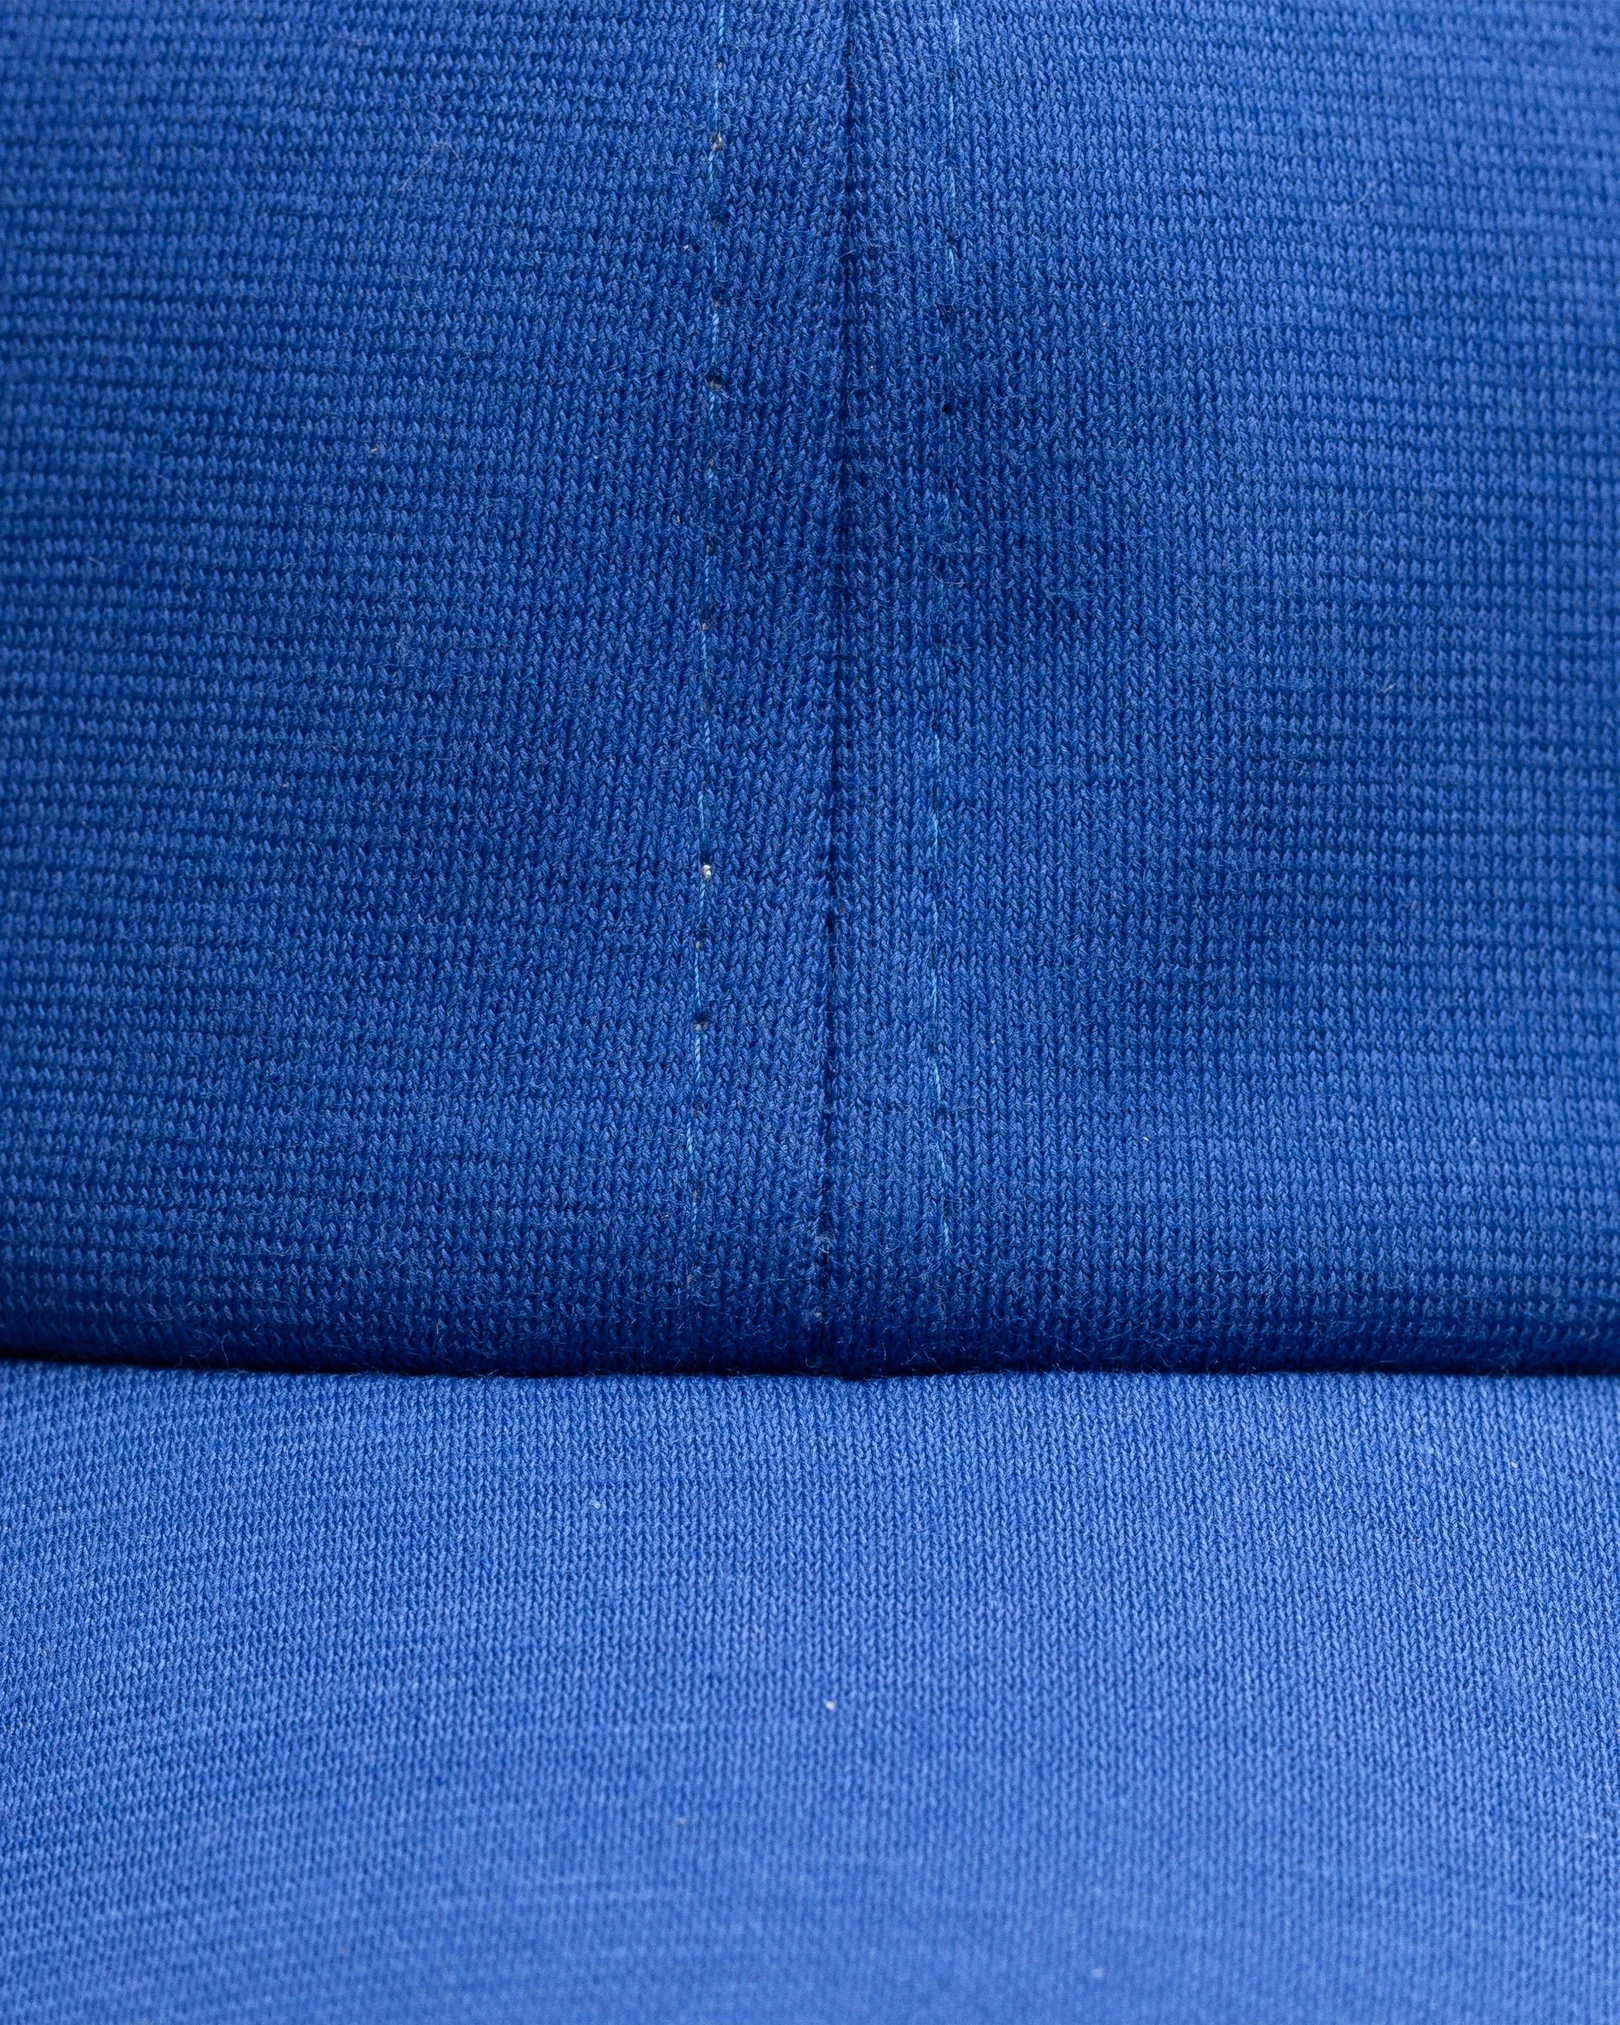 Eton - blue baseball cap